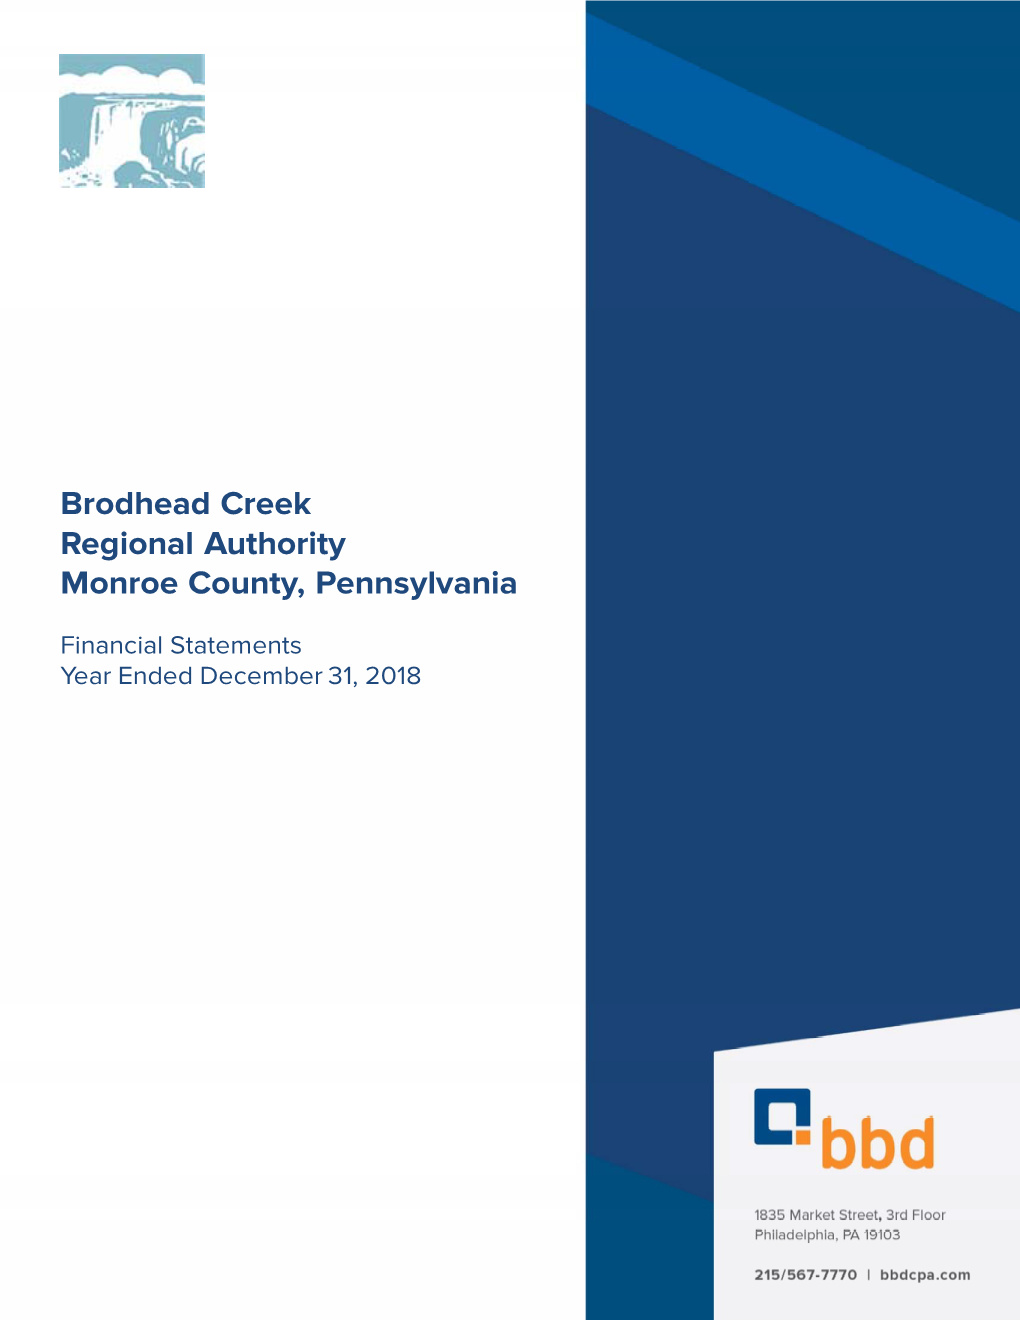 Brodhead Creek Regional Authority Monroe County, Pennsylvania